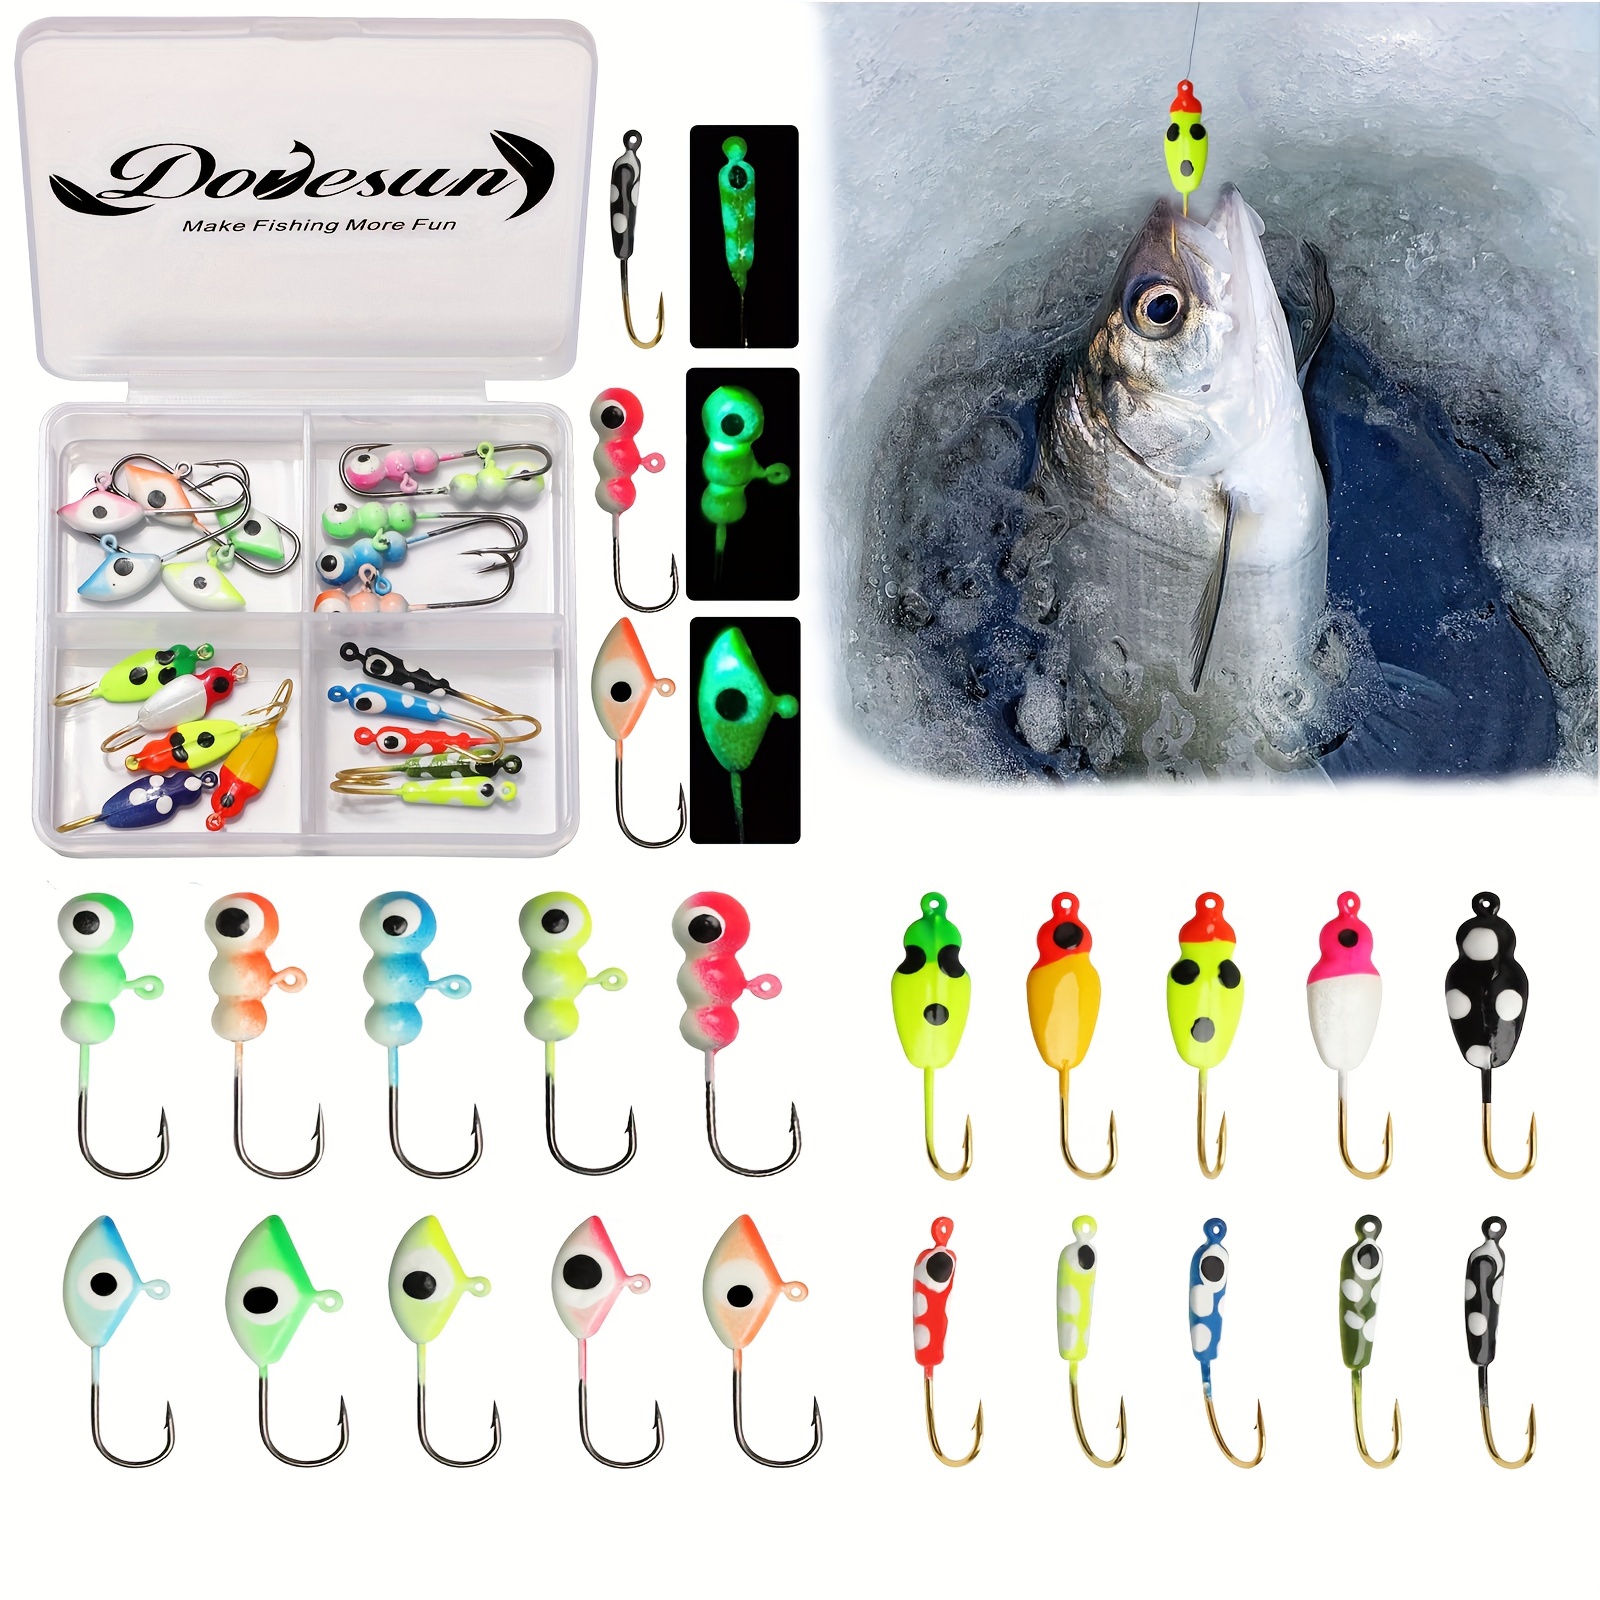 Dovesun 20pcs Ice Fishing Jigs Kit, Luminous Jig Heads Fishing Hooks With  Tackle Box, Fishing Accessories